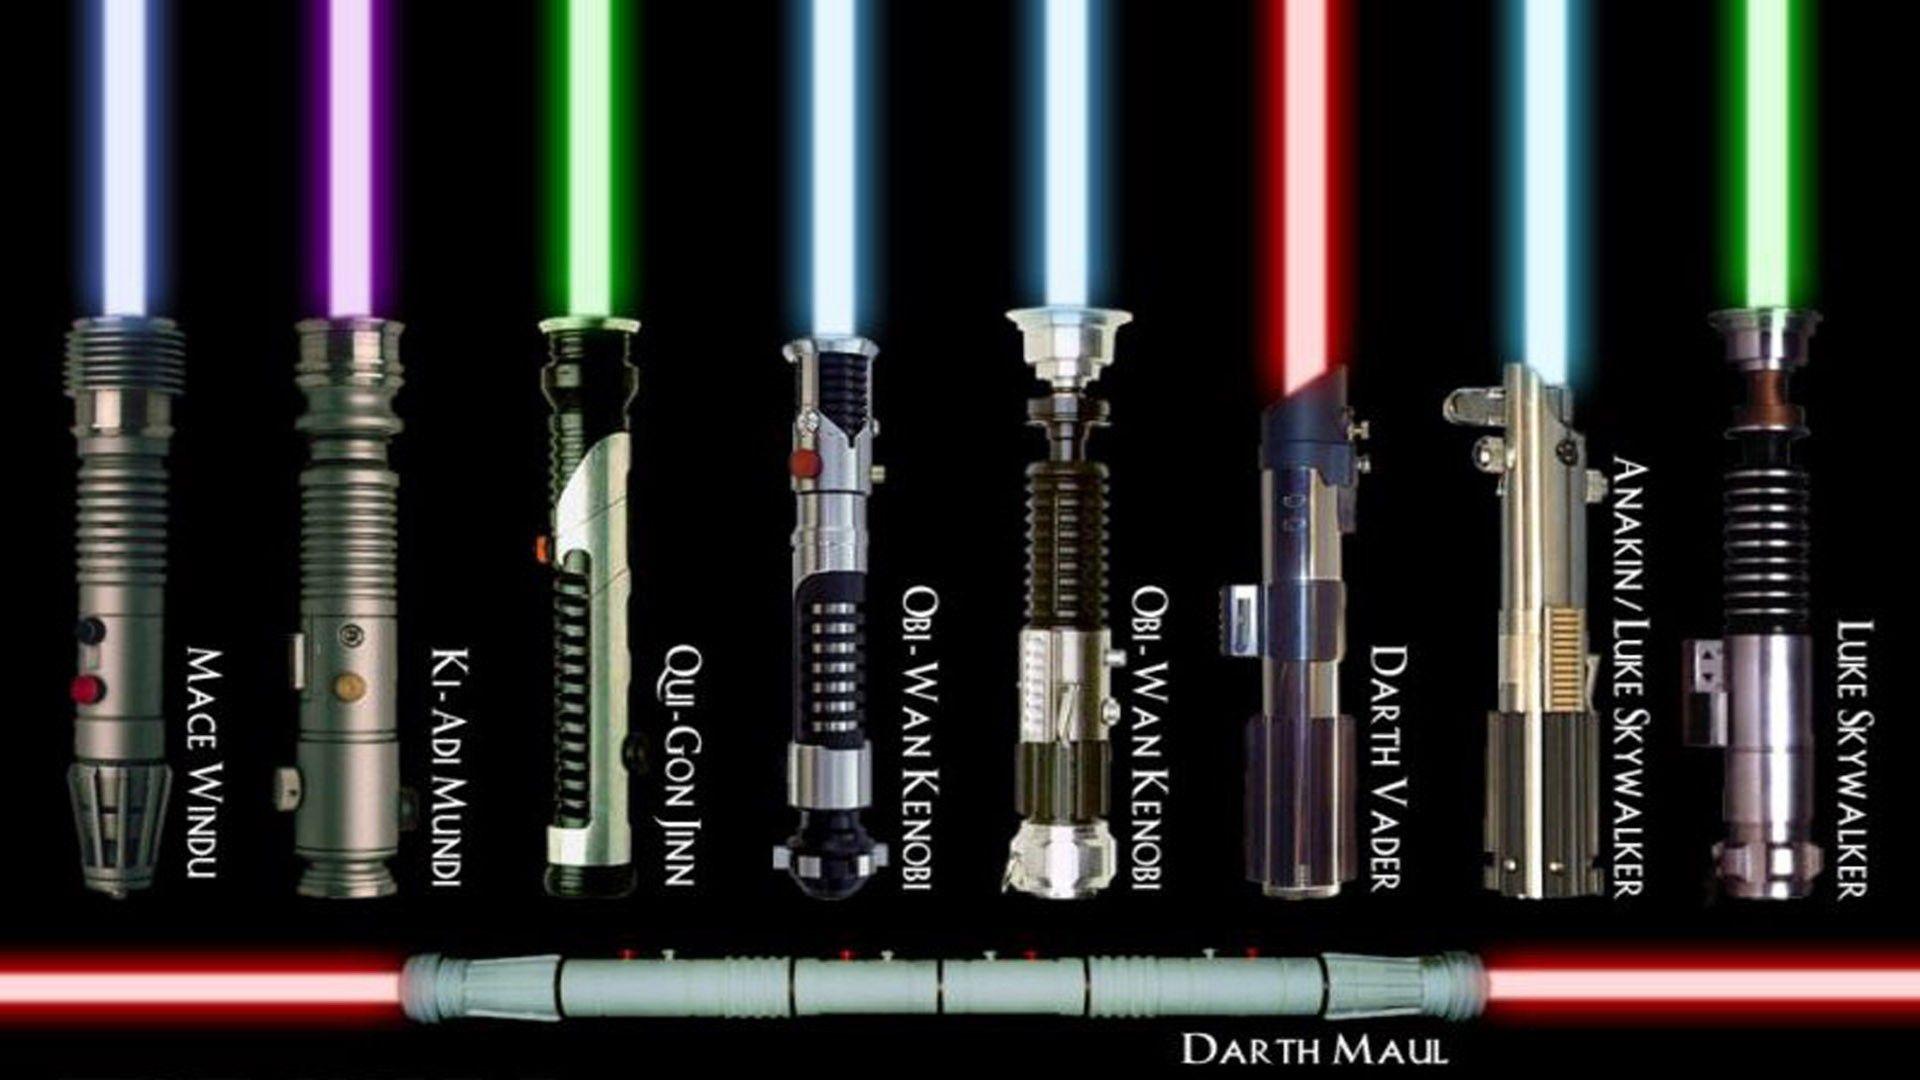 Star Wars Lightsaber Wallpapers Hd Pics Lightsabers Of Smartphone.